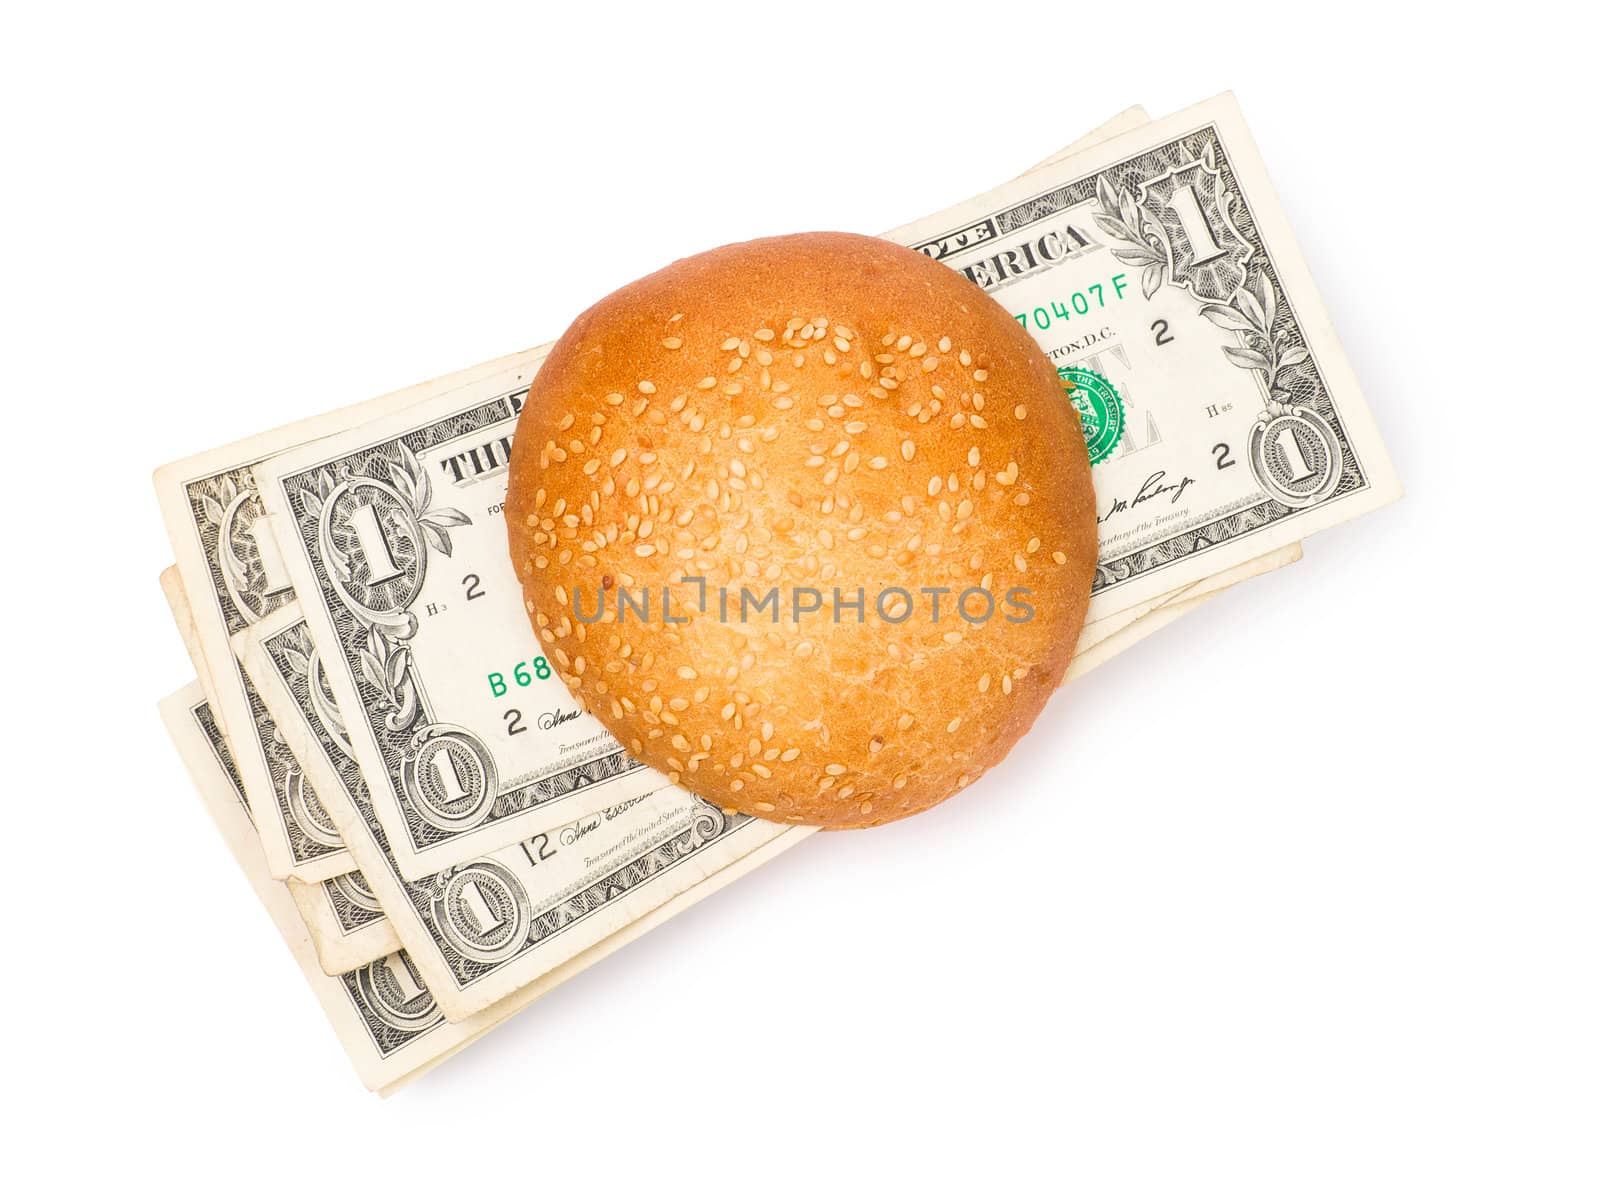 Money-stuffed burger by timbrk